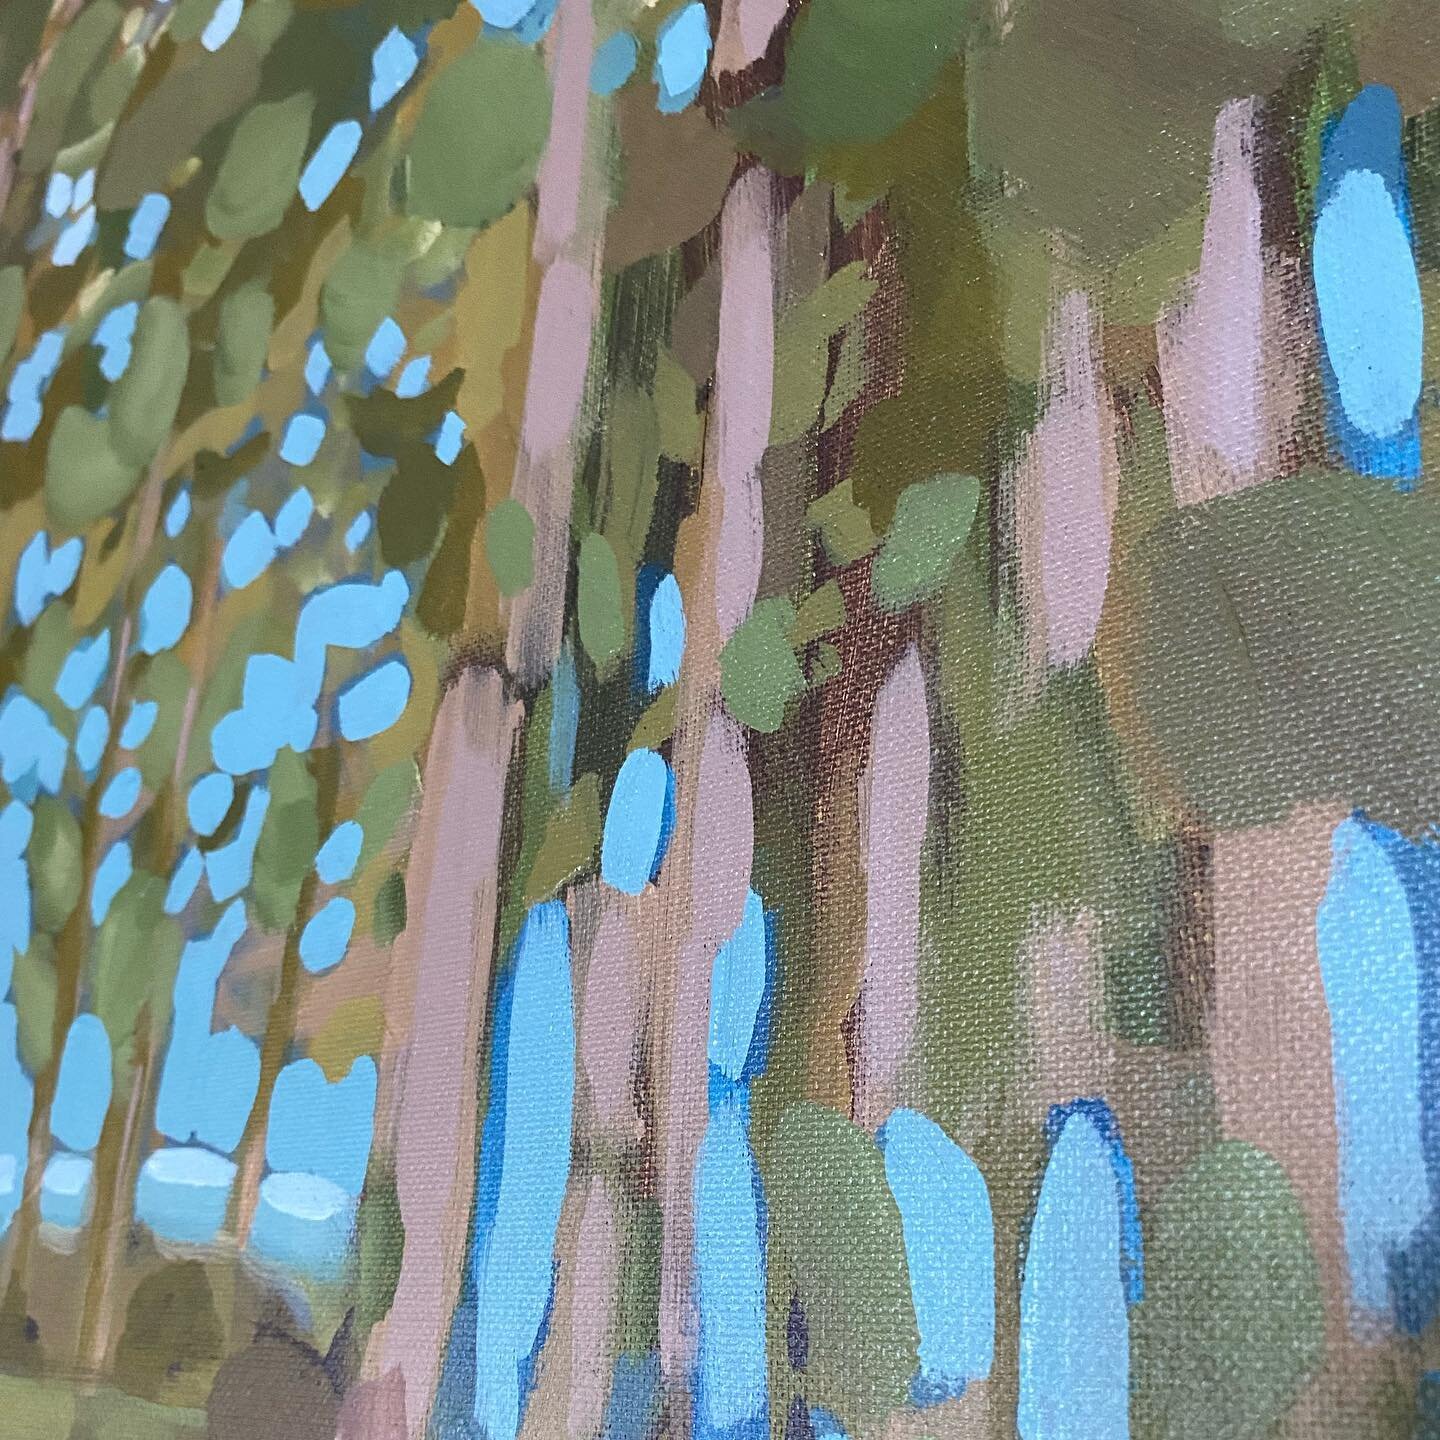 Oak Grove
.
.
.
.
.⁠
.

#abstractart #contemporaryart #abstractimpressionism #canadianpainter #modernfloralart #lansdscapeart #emergingart #canadianartist #canadianartist #interiordecor #artforsalebyartist #brushstrokes #halifaxartist #botanicalpaint